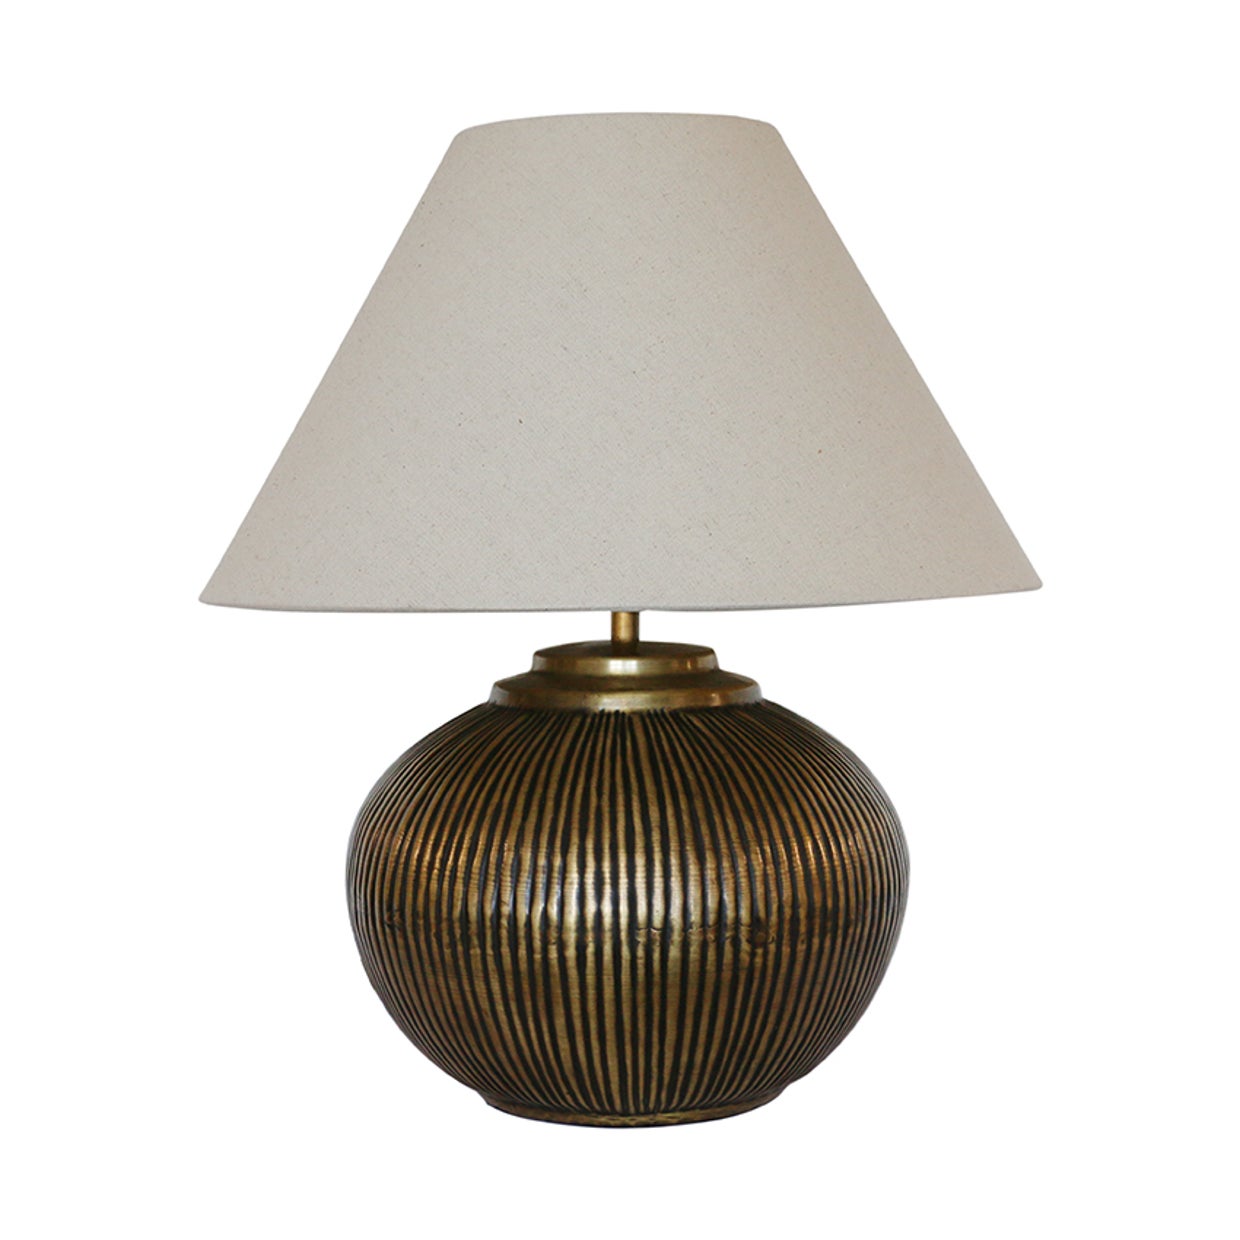 Marbella Ball Brass Lamp Base with Ridges in Dark Brass Antique Finish